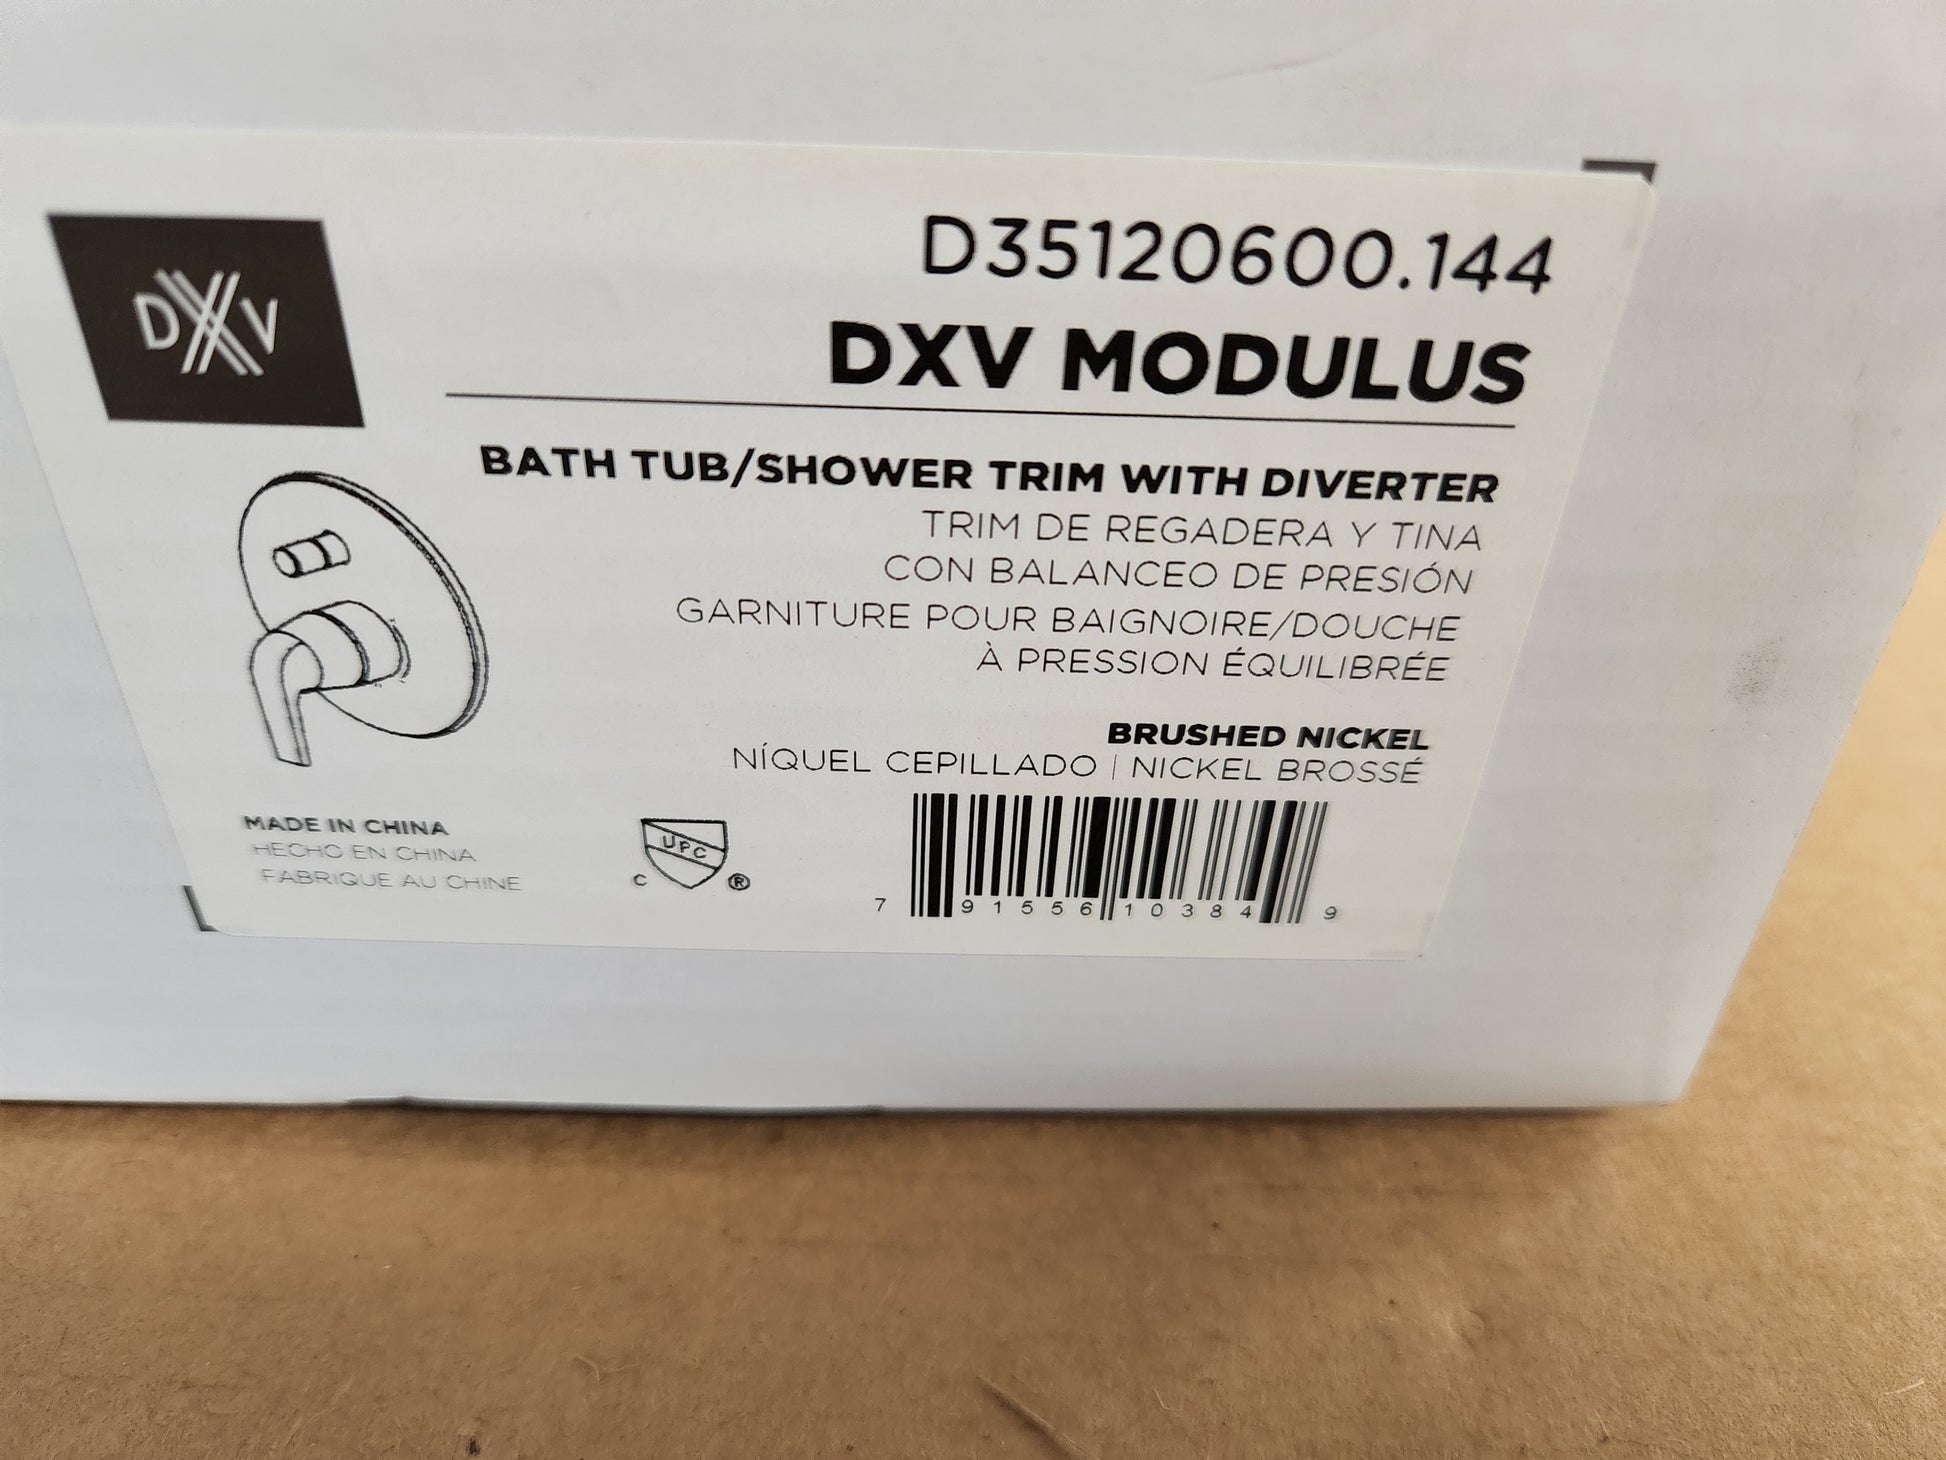 DXV MODULUS BRUSHED NICKEL BATH TUB/SHOWER TRIM WITH DIVERTER